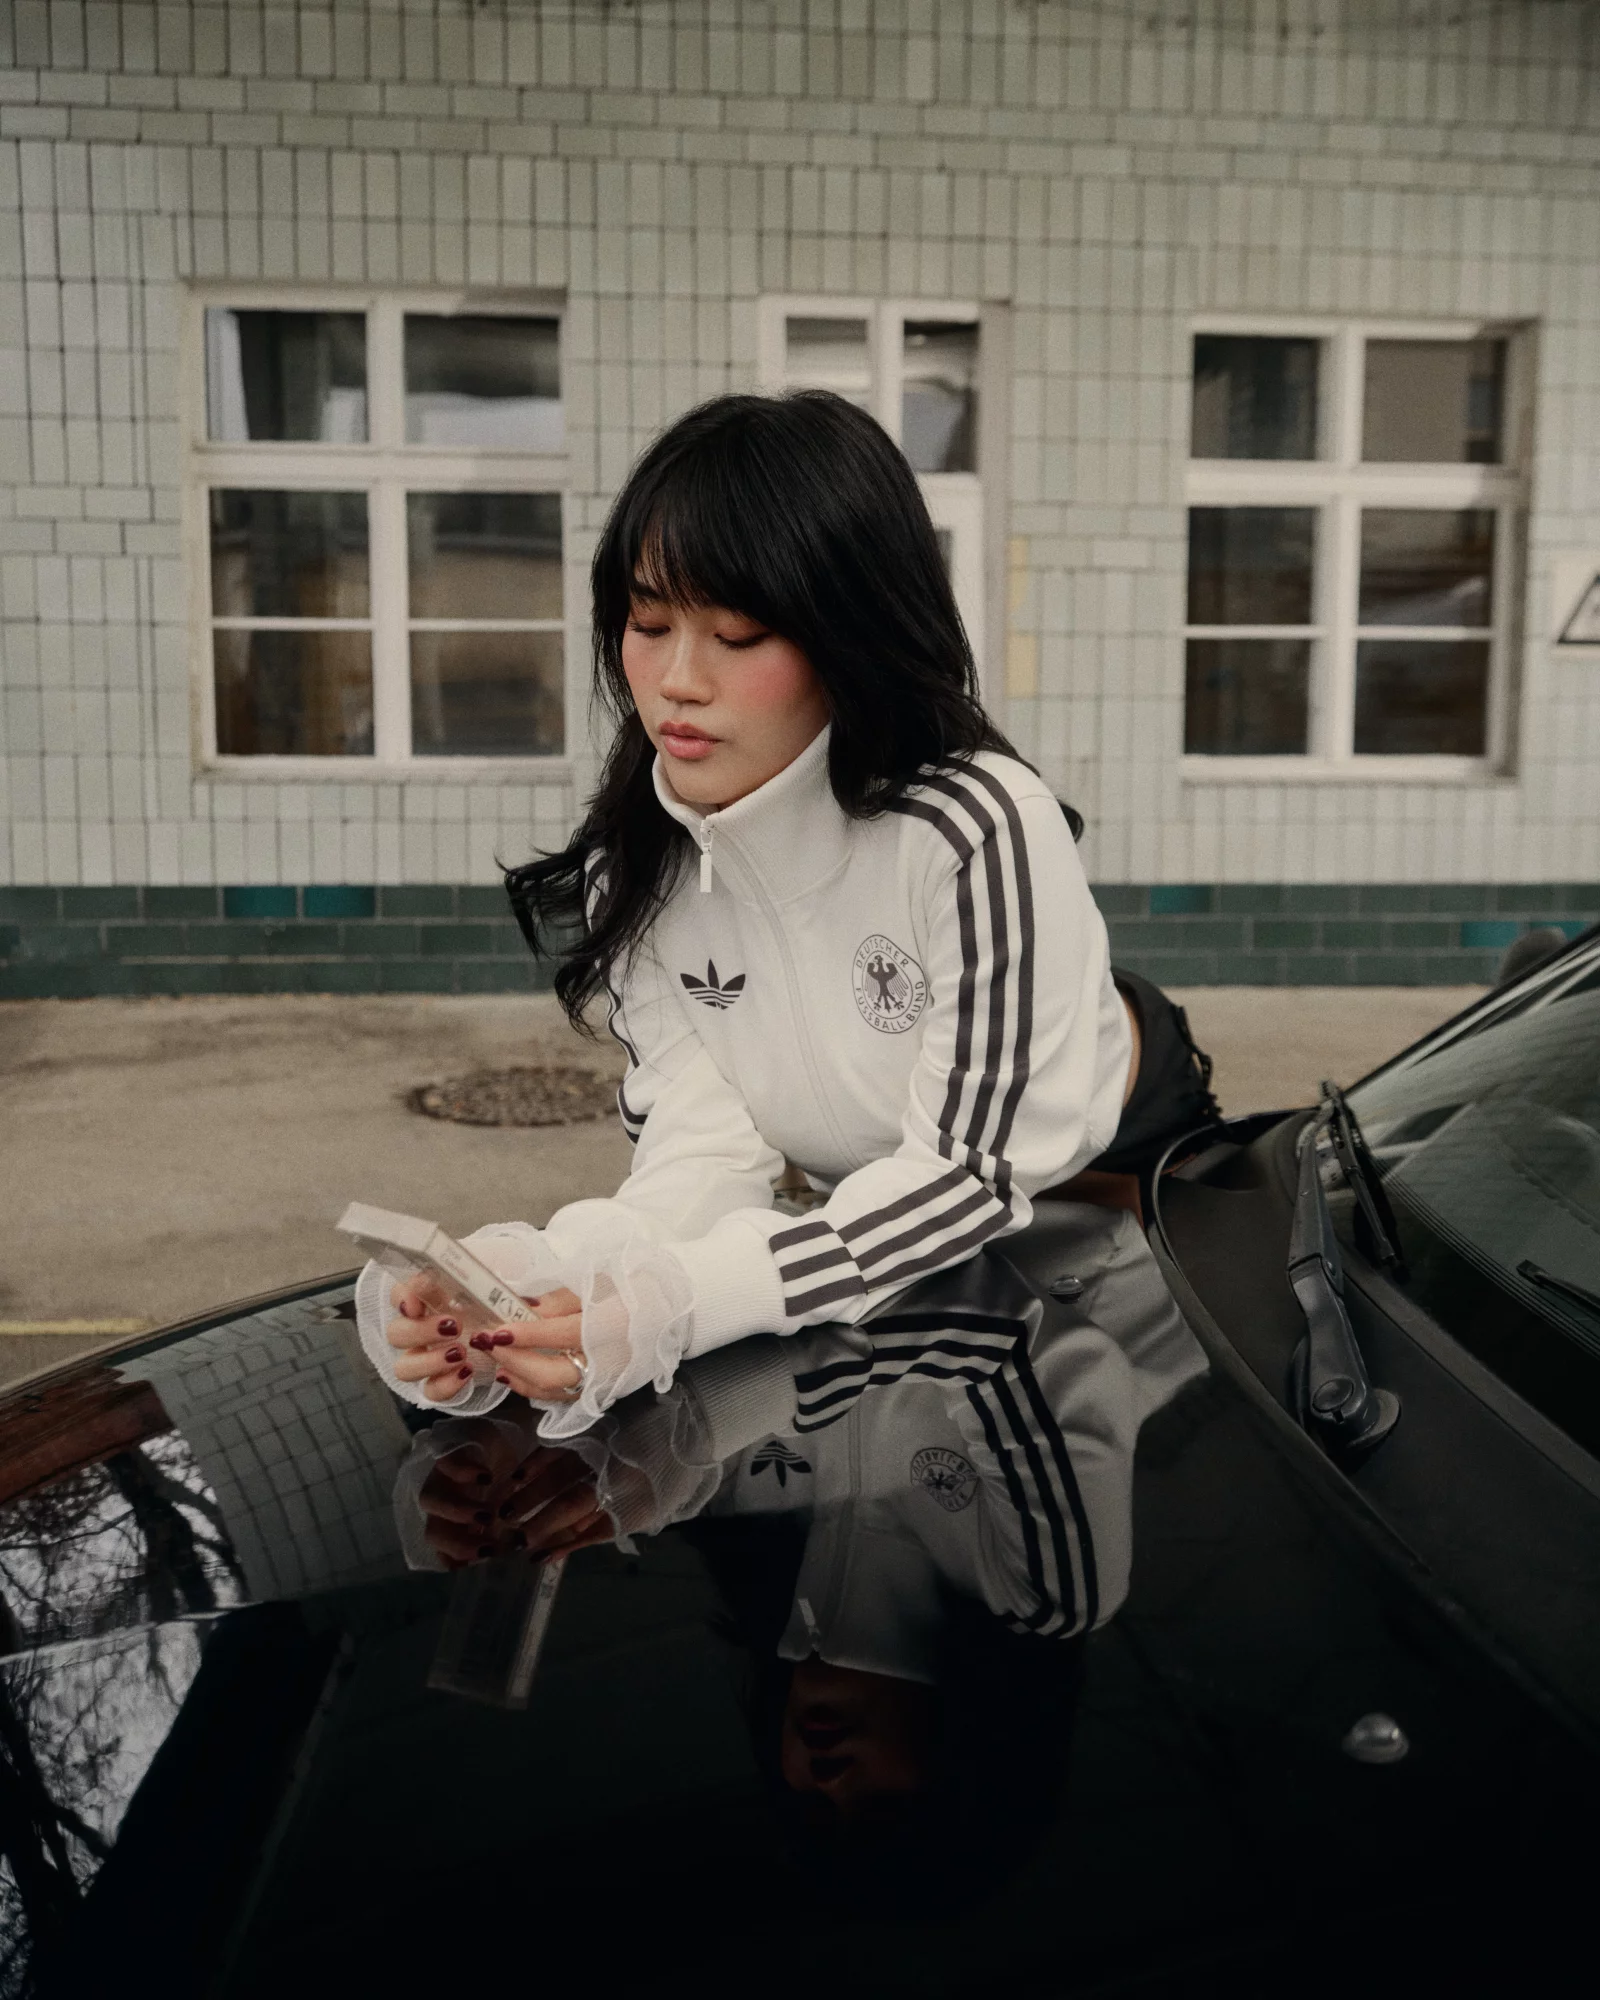 Adidas Bring Back Campaign 8 by Carina DEWHURST